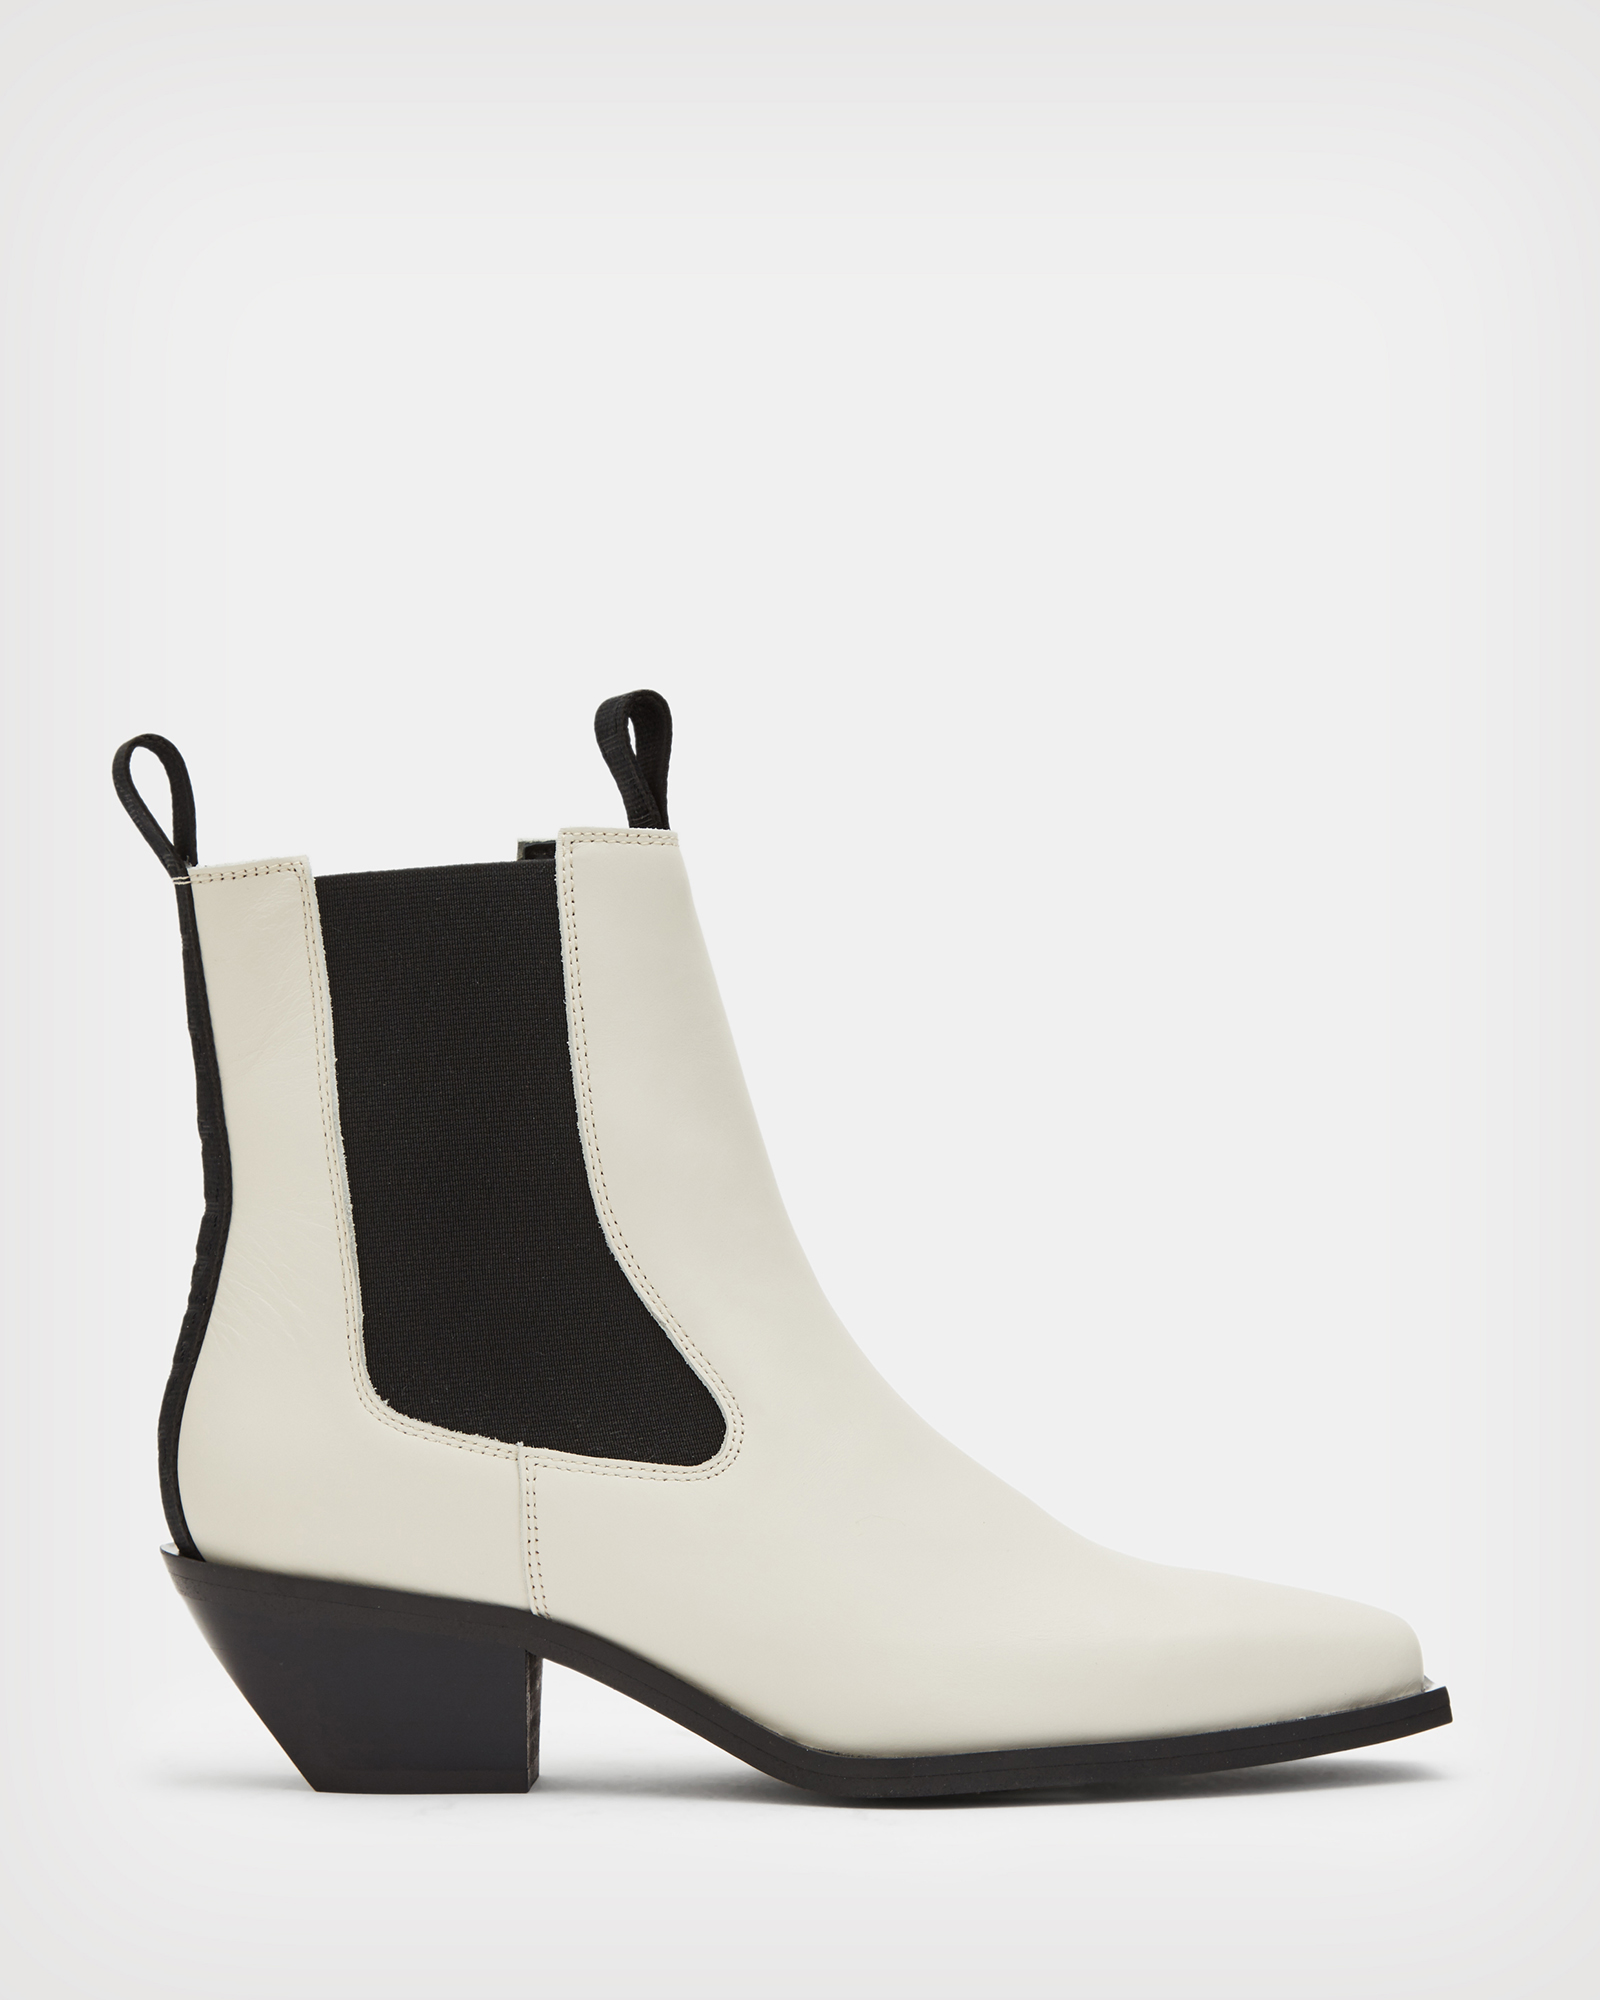 AllSaints Women's Vally Leather Boots, Stone White, Size: UK 3/US 6/EU 36